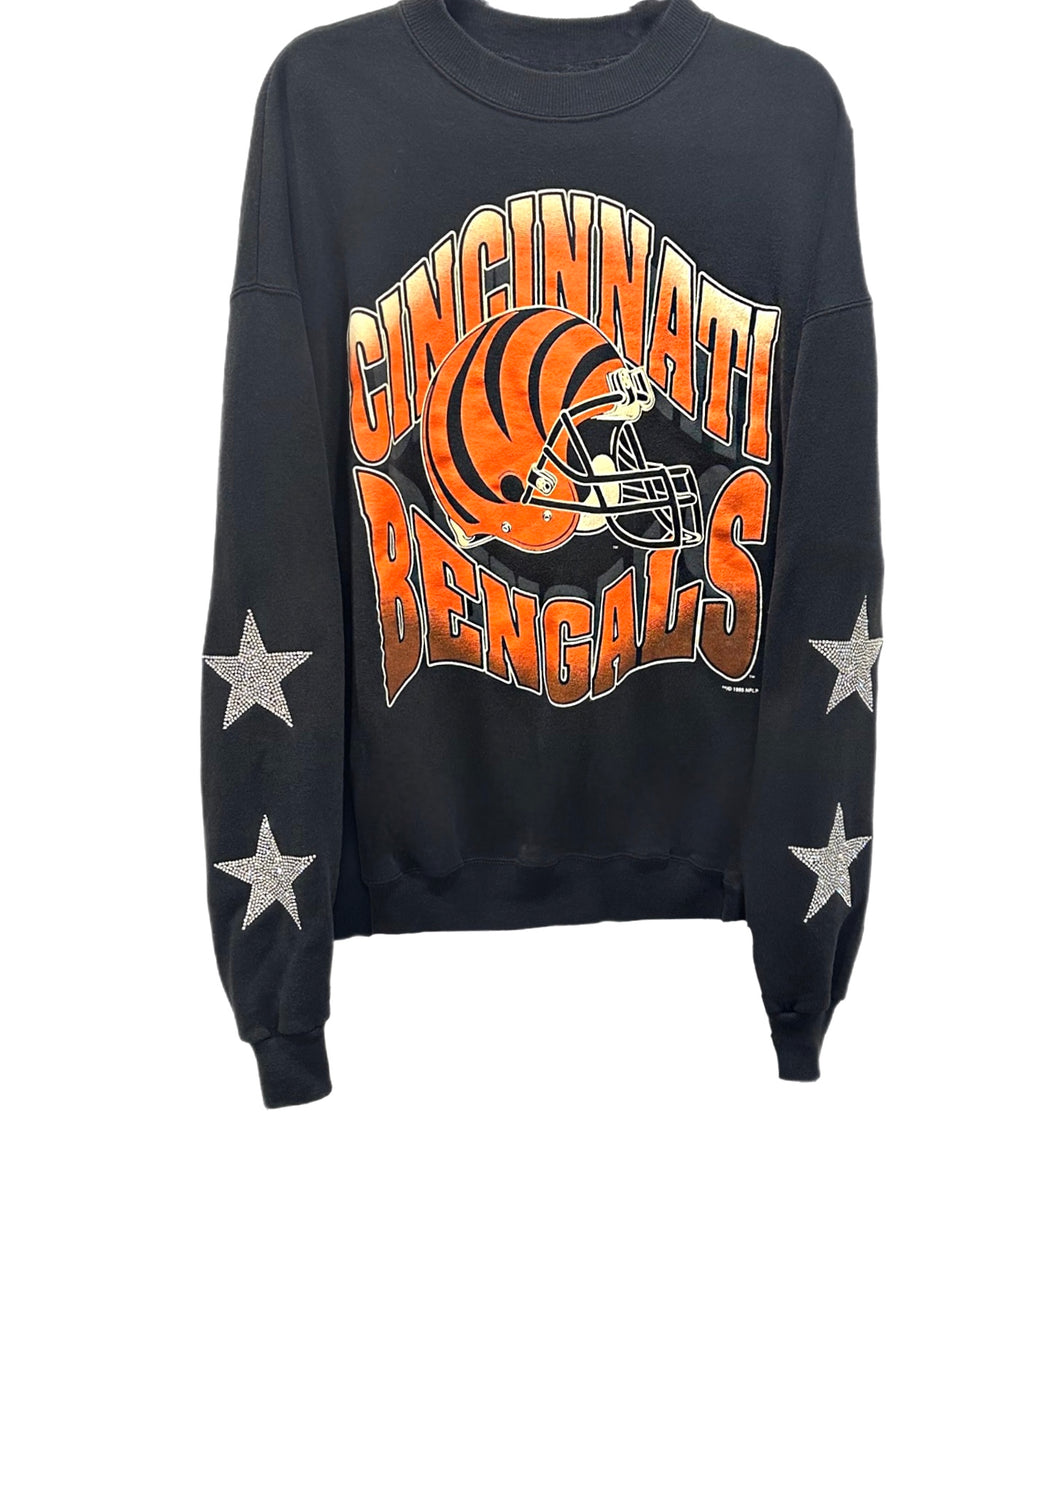 Cincinnati Bengals, NFL One of a KIND Vintage ”Rare Find” Sweatshirt with Crystal Star Design